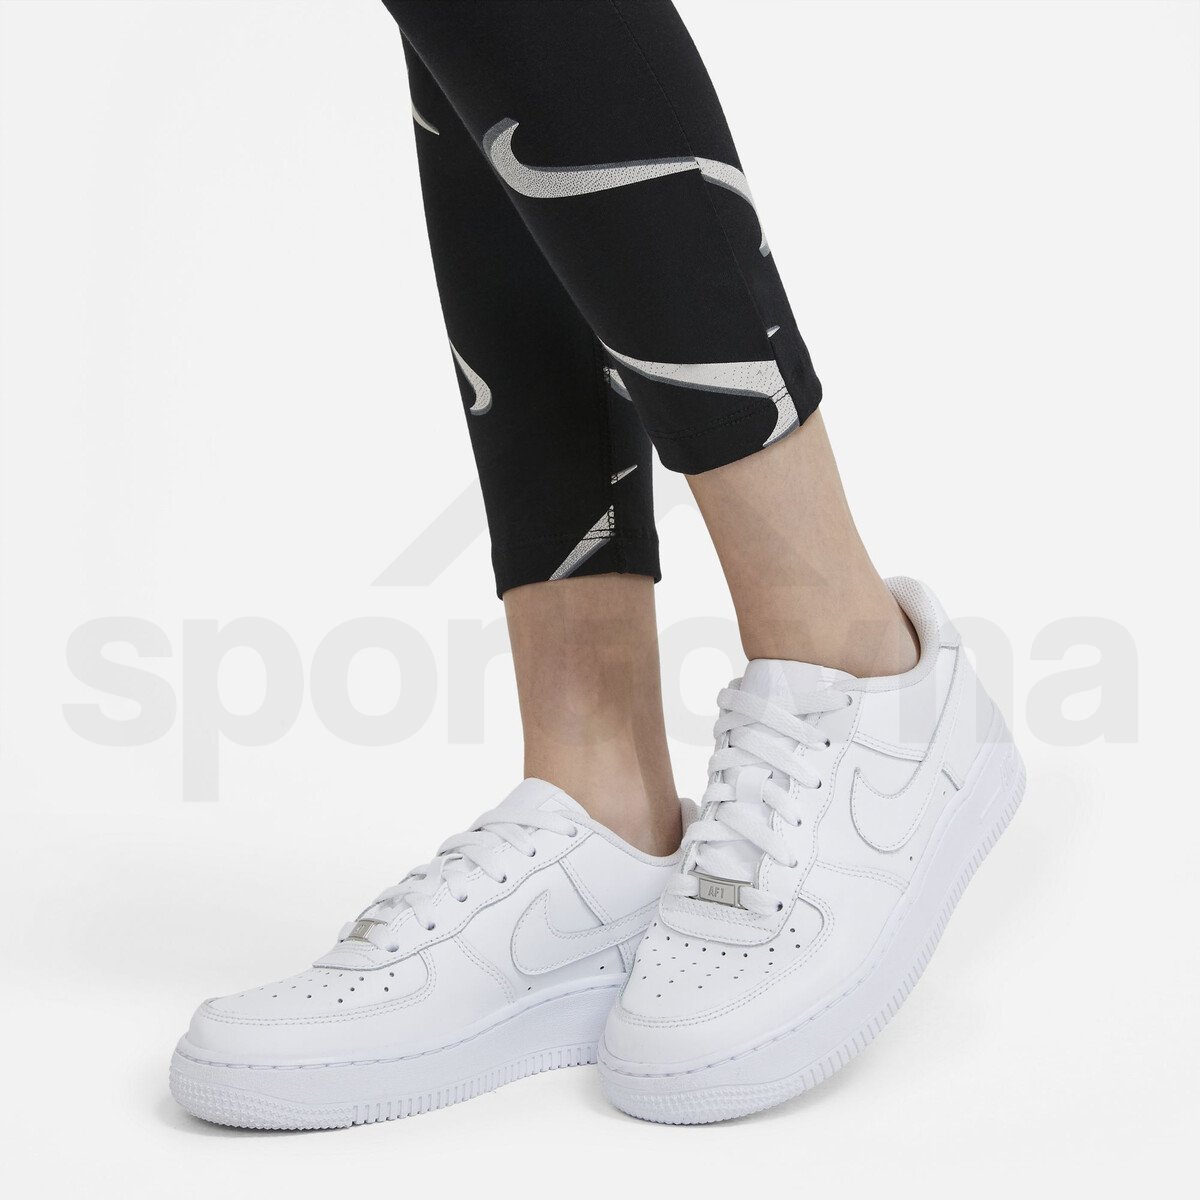 Legíny Nike Sportswear Favorites J - černá/bílá